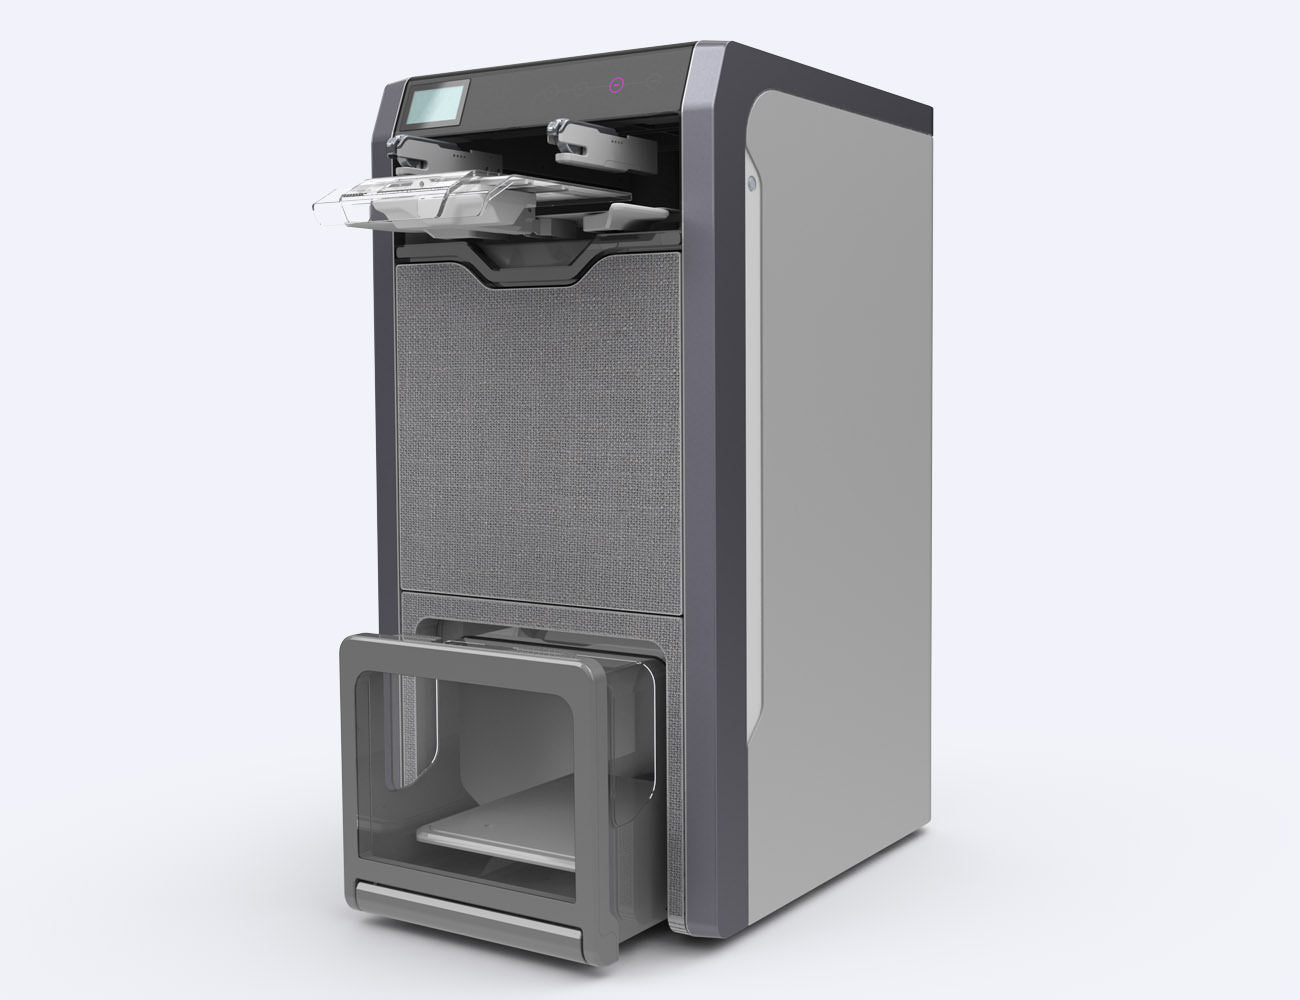 Foldimate - The daily laundry folding machine